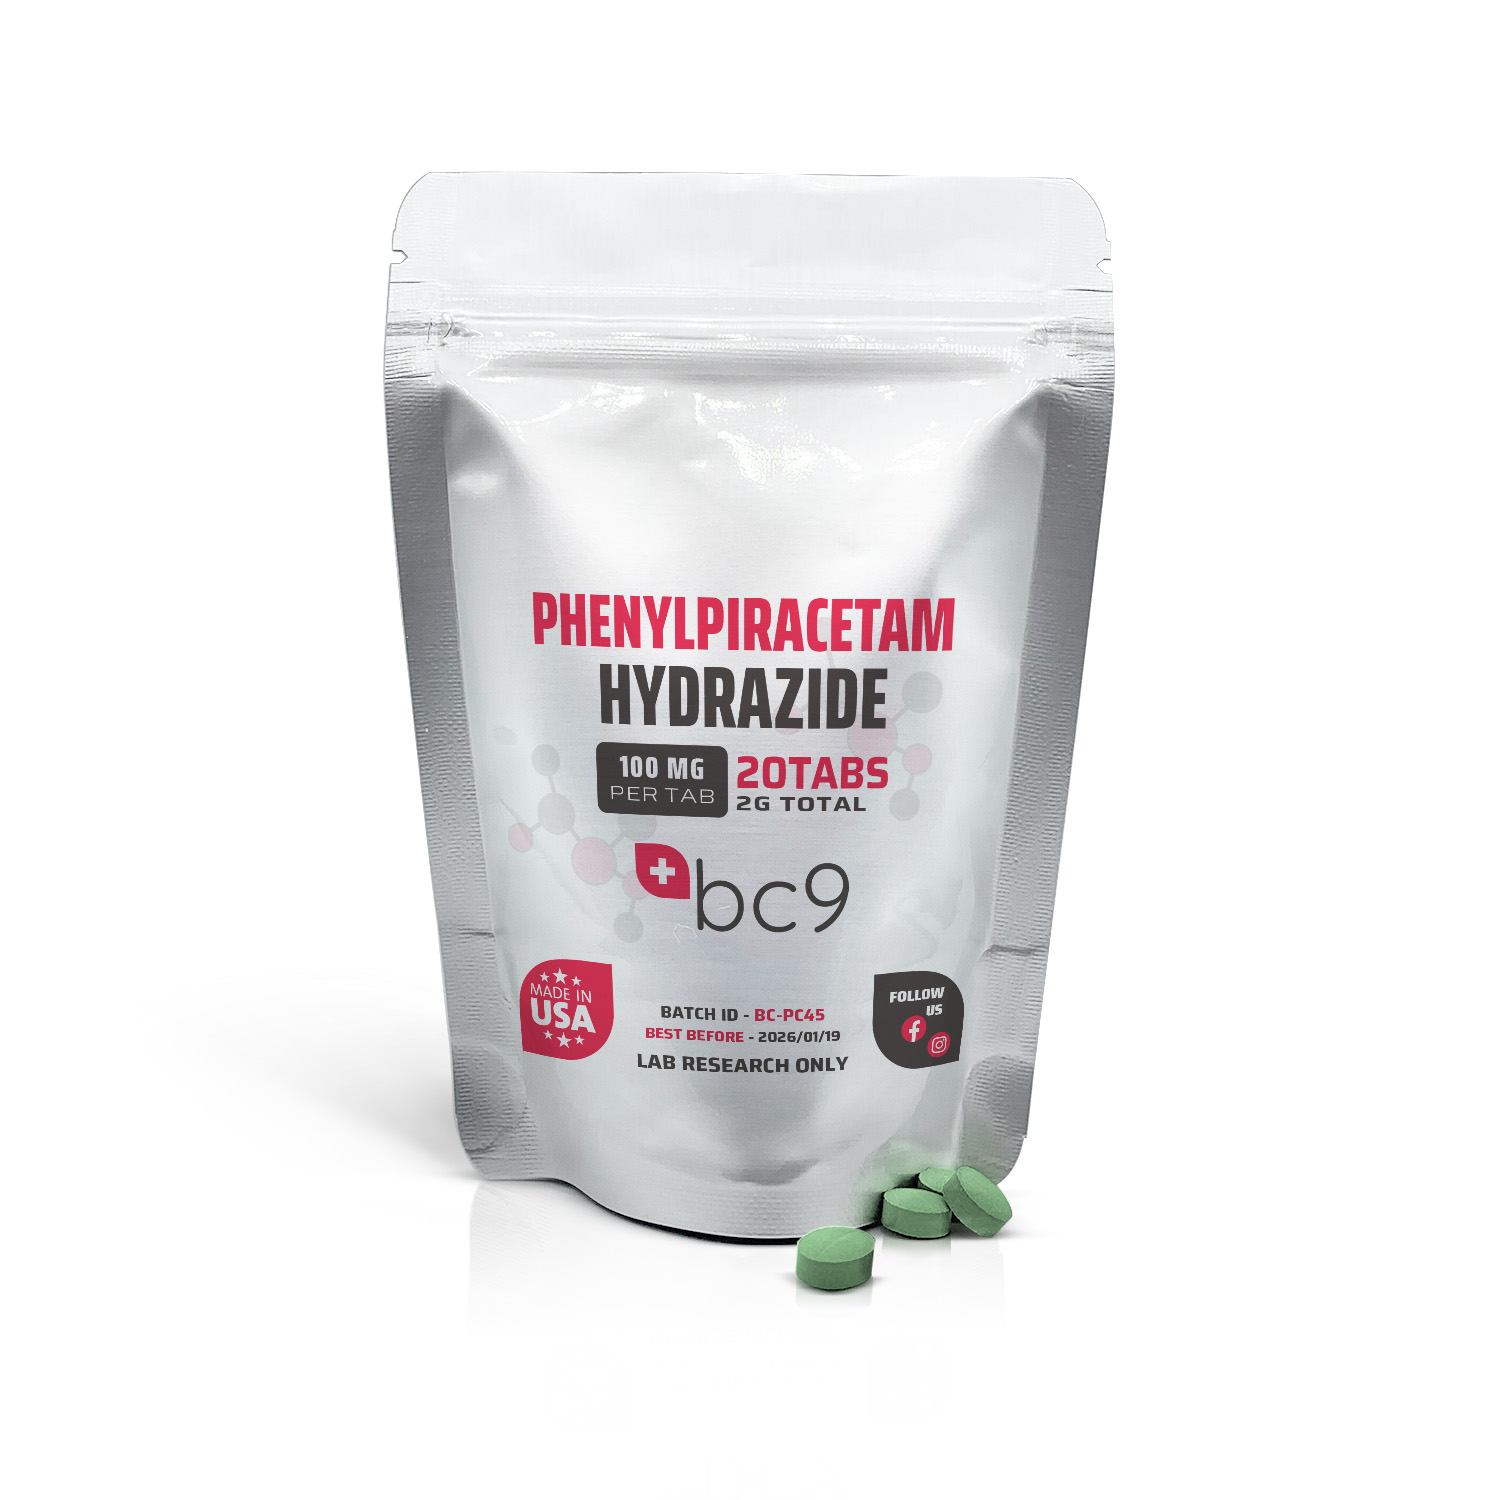 Phenylpiracetam Hydrazide Tablets For Sale | BC9.org